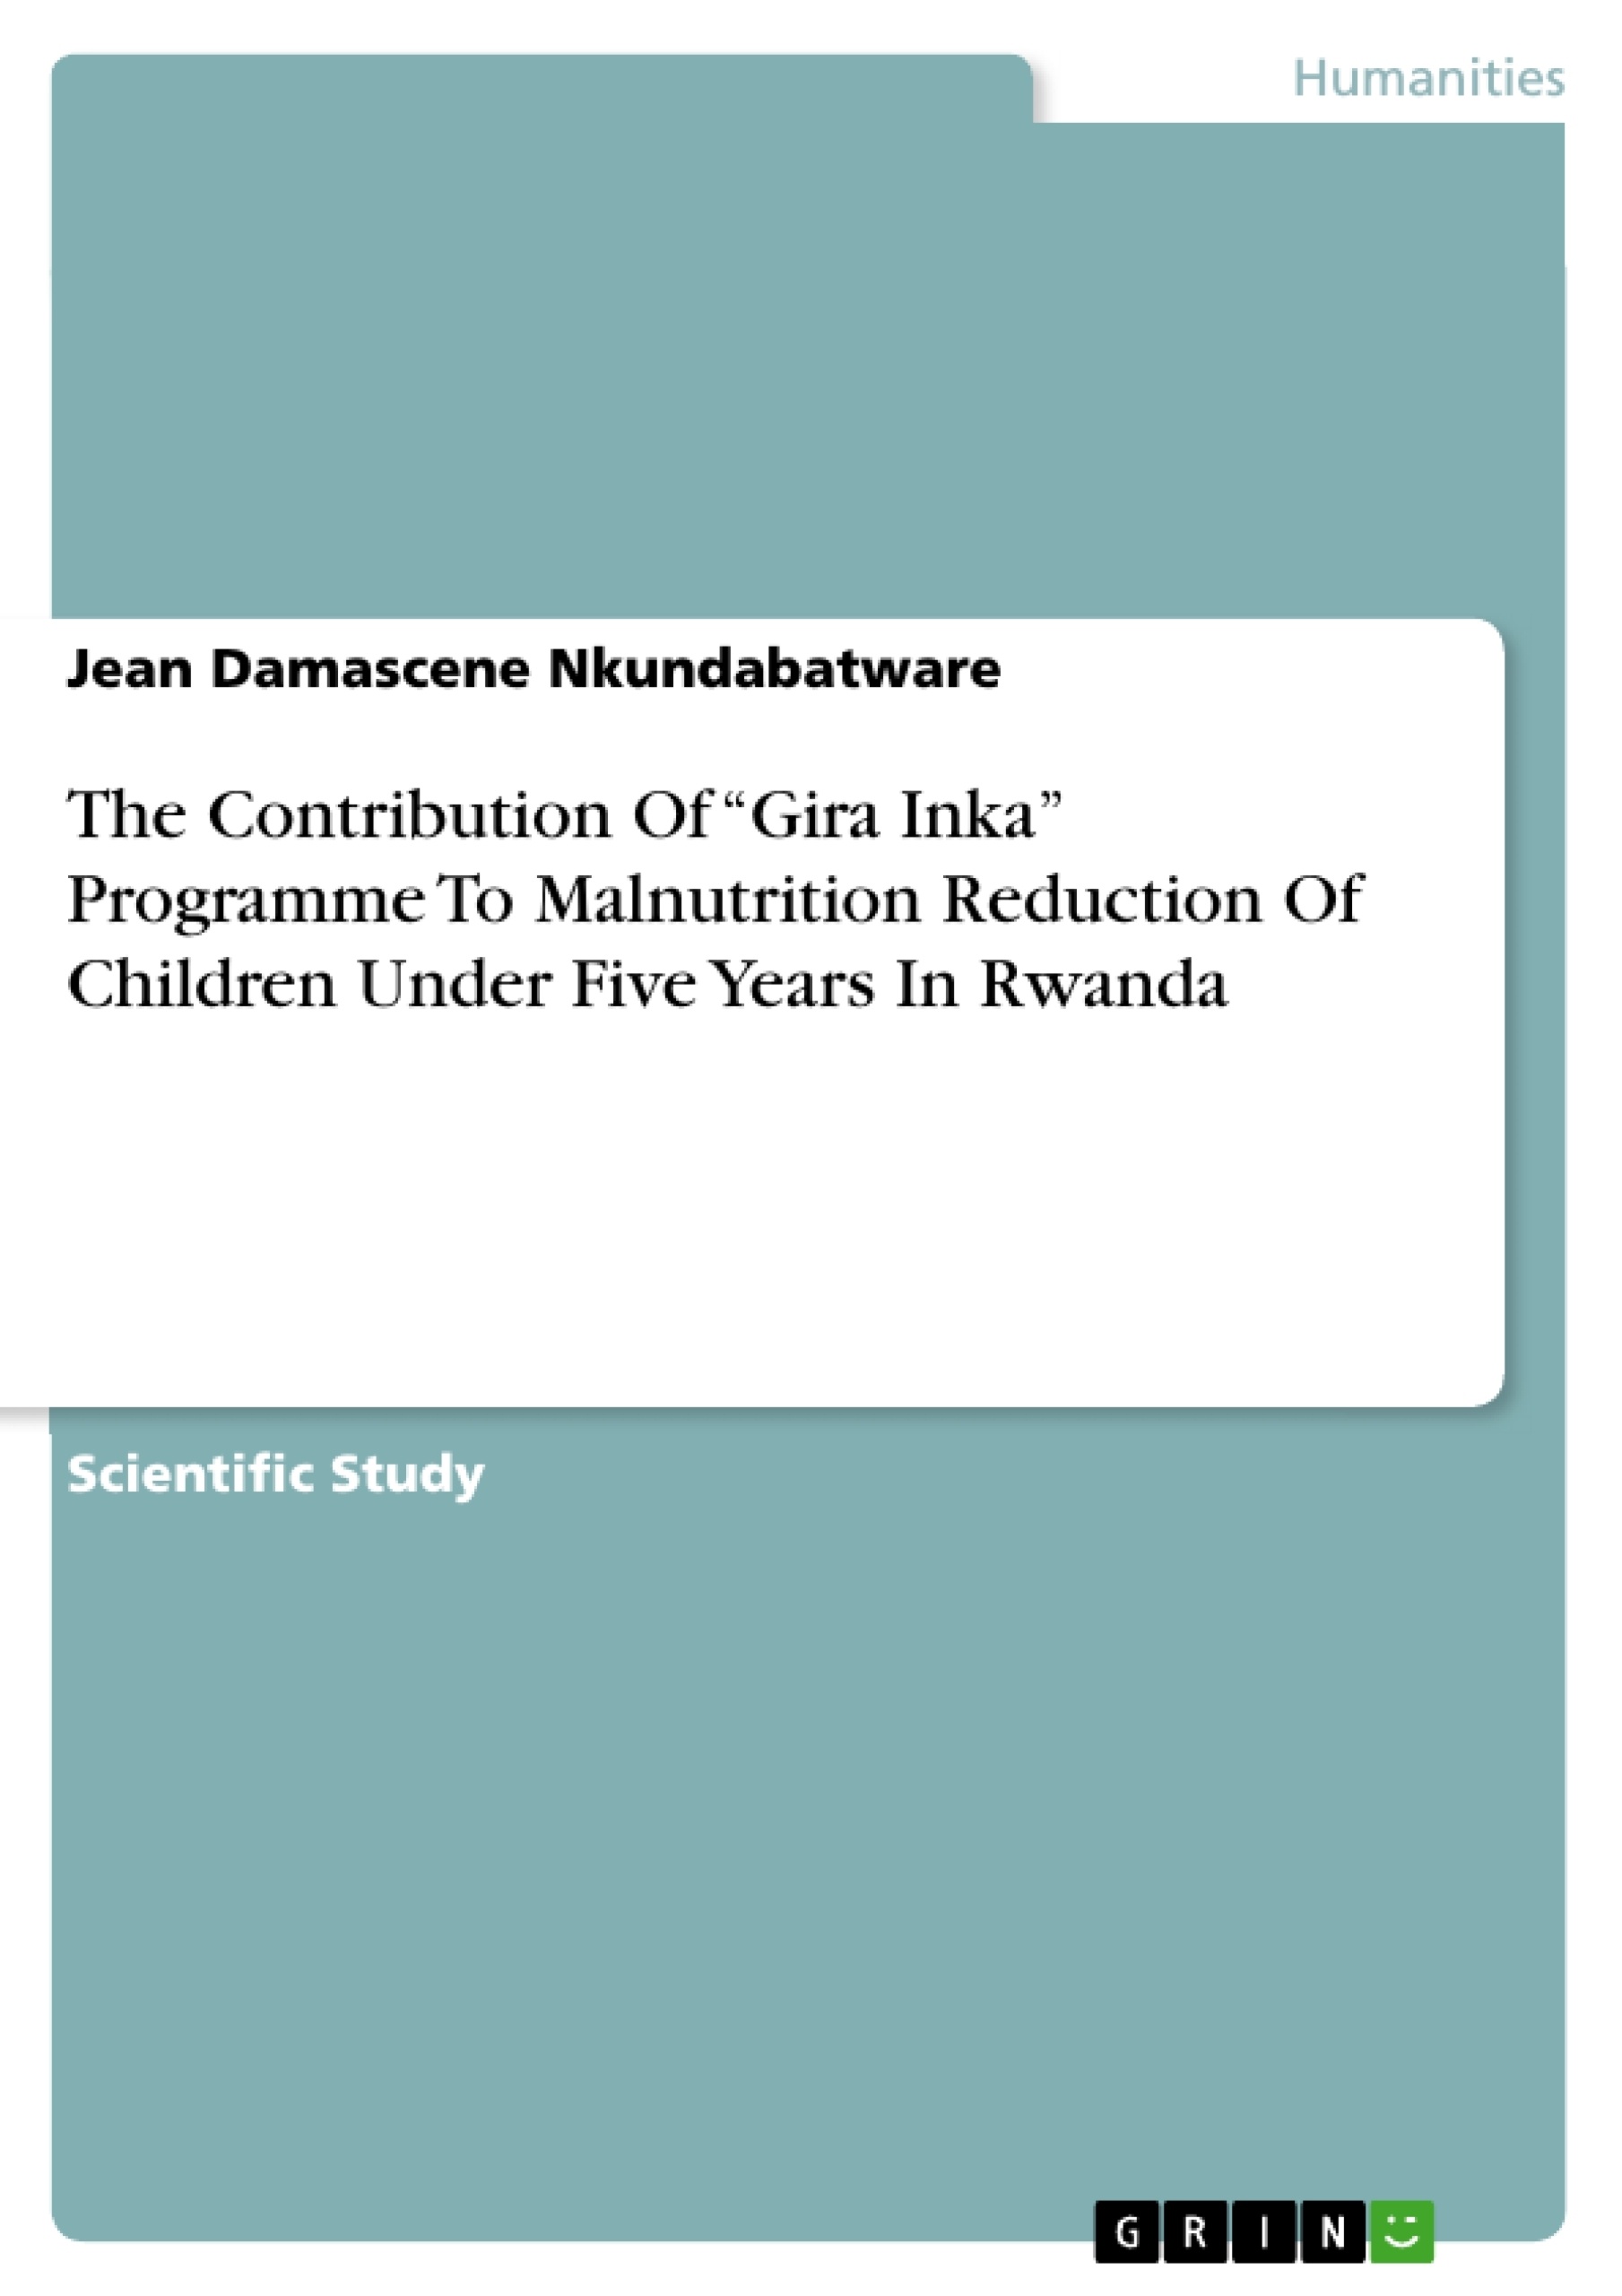 Title: The Contribution Of “Gira Inka” Programme To Malnutrition Reduction Of Children Under Five Years In Rwanda